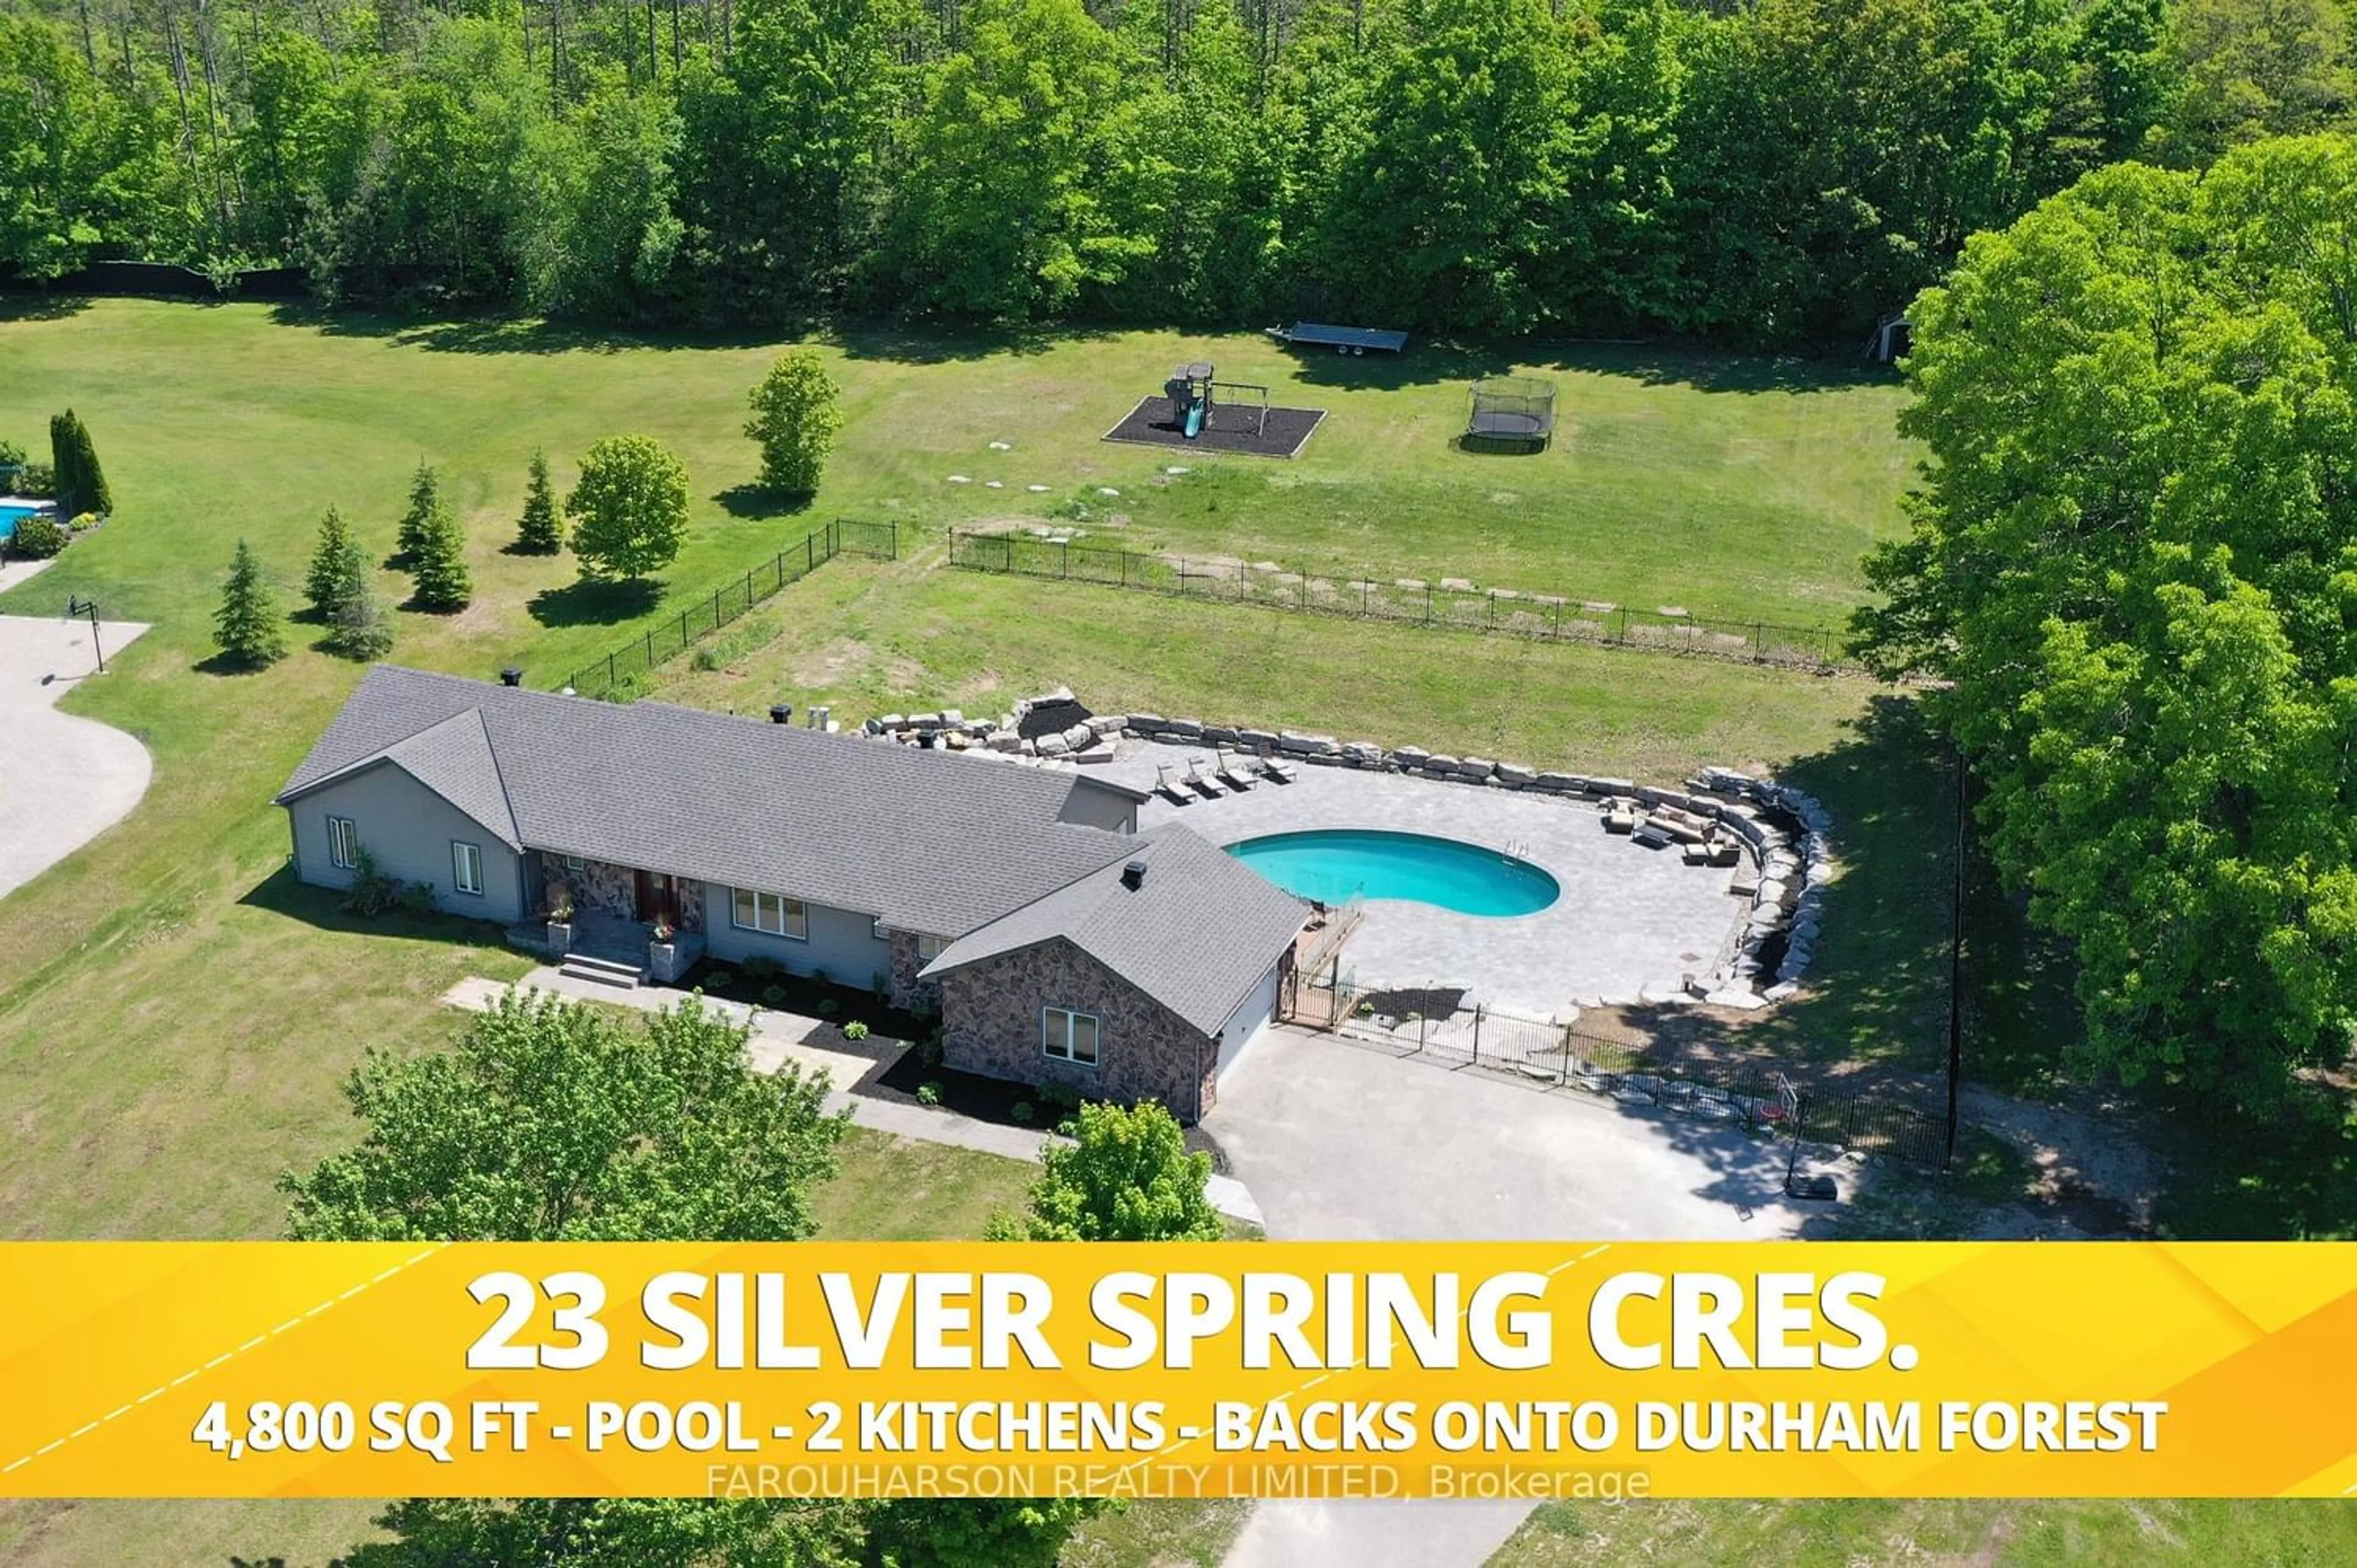 Indoor or outdoor pool for 23 Silver Spring Cres, Uxbridge Ontario L9P 1R4